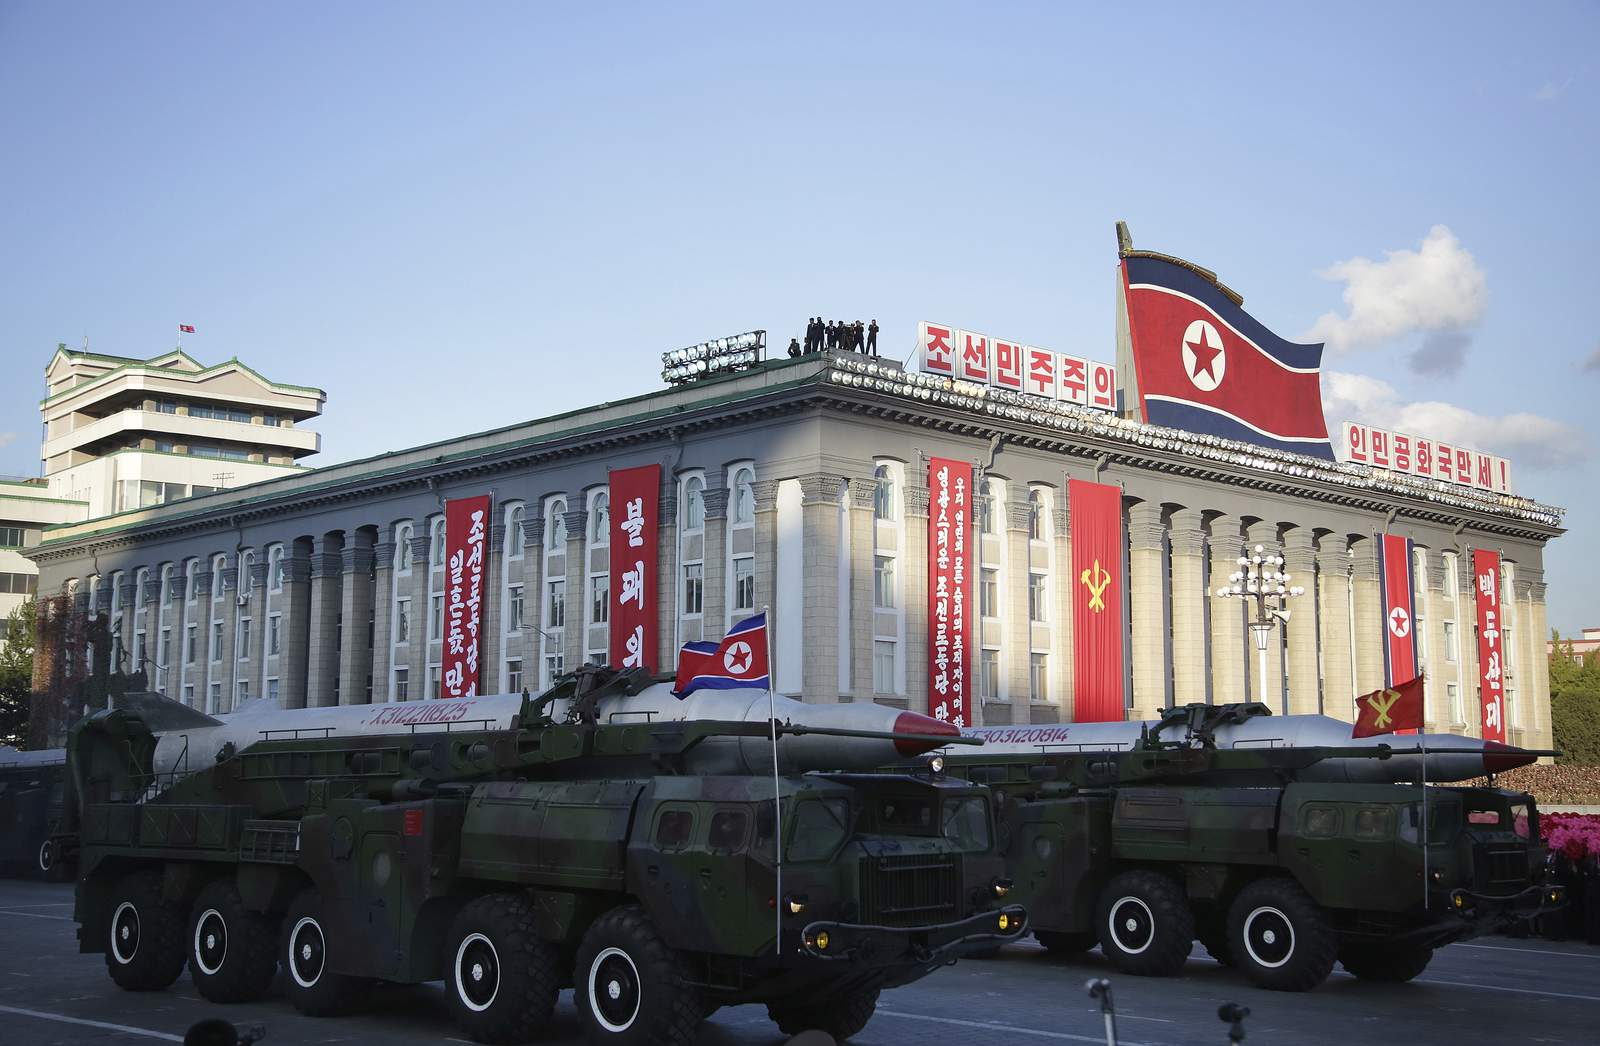 North Korea may show new missiles at weekend military parade